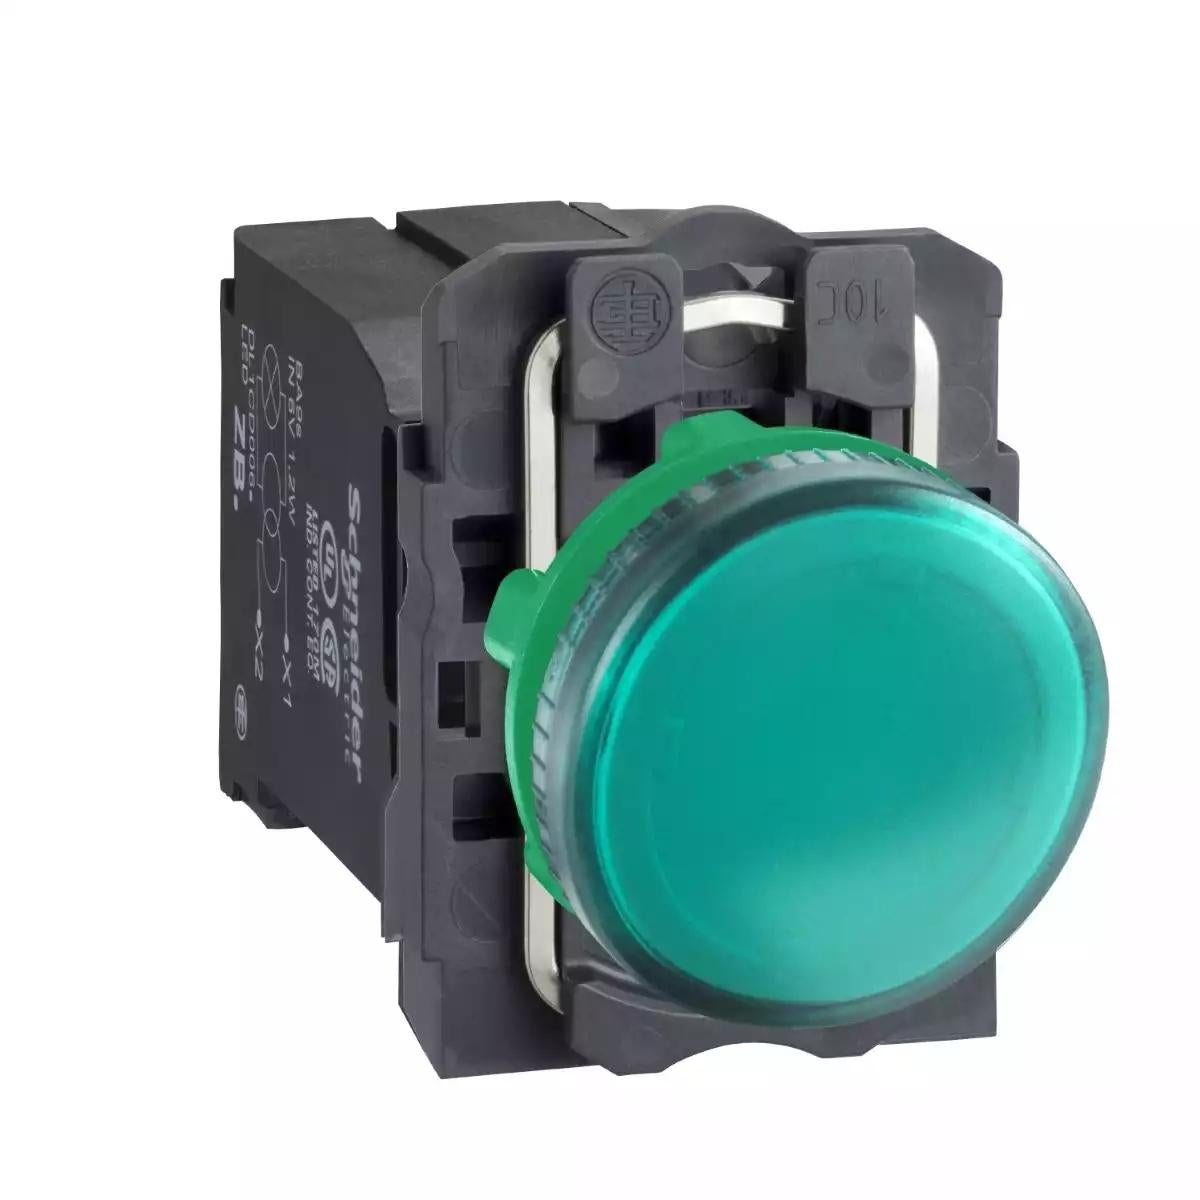 Pilot light, Harmony XB5, green incandescent, plastic, 22mm, plain lens, BA9s bulb, 220...240V